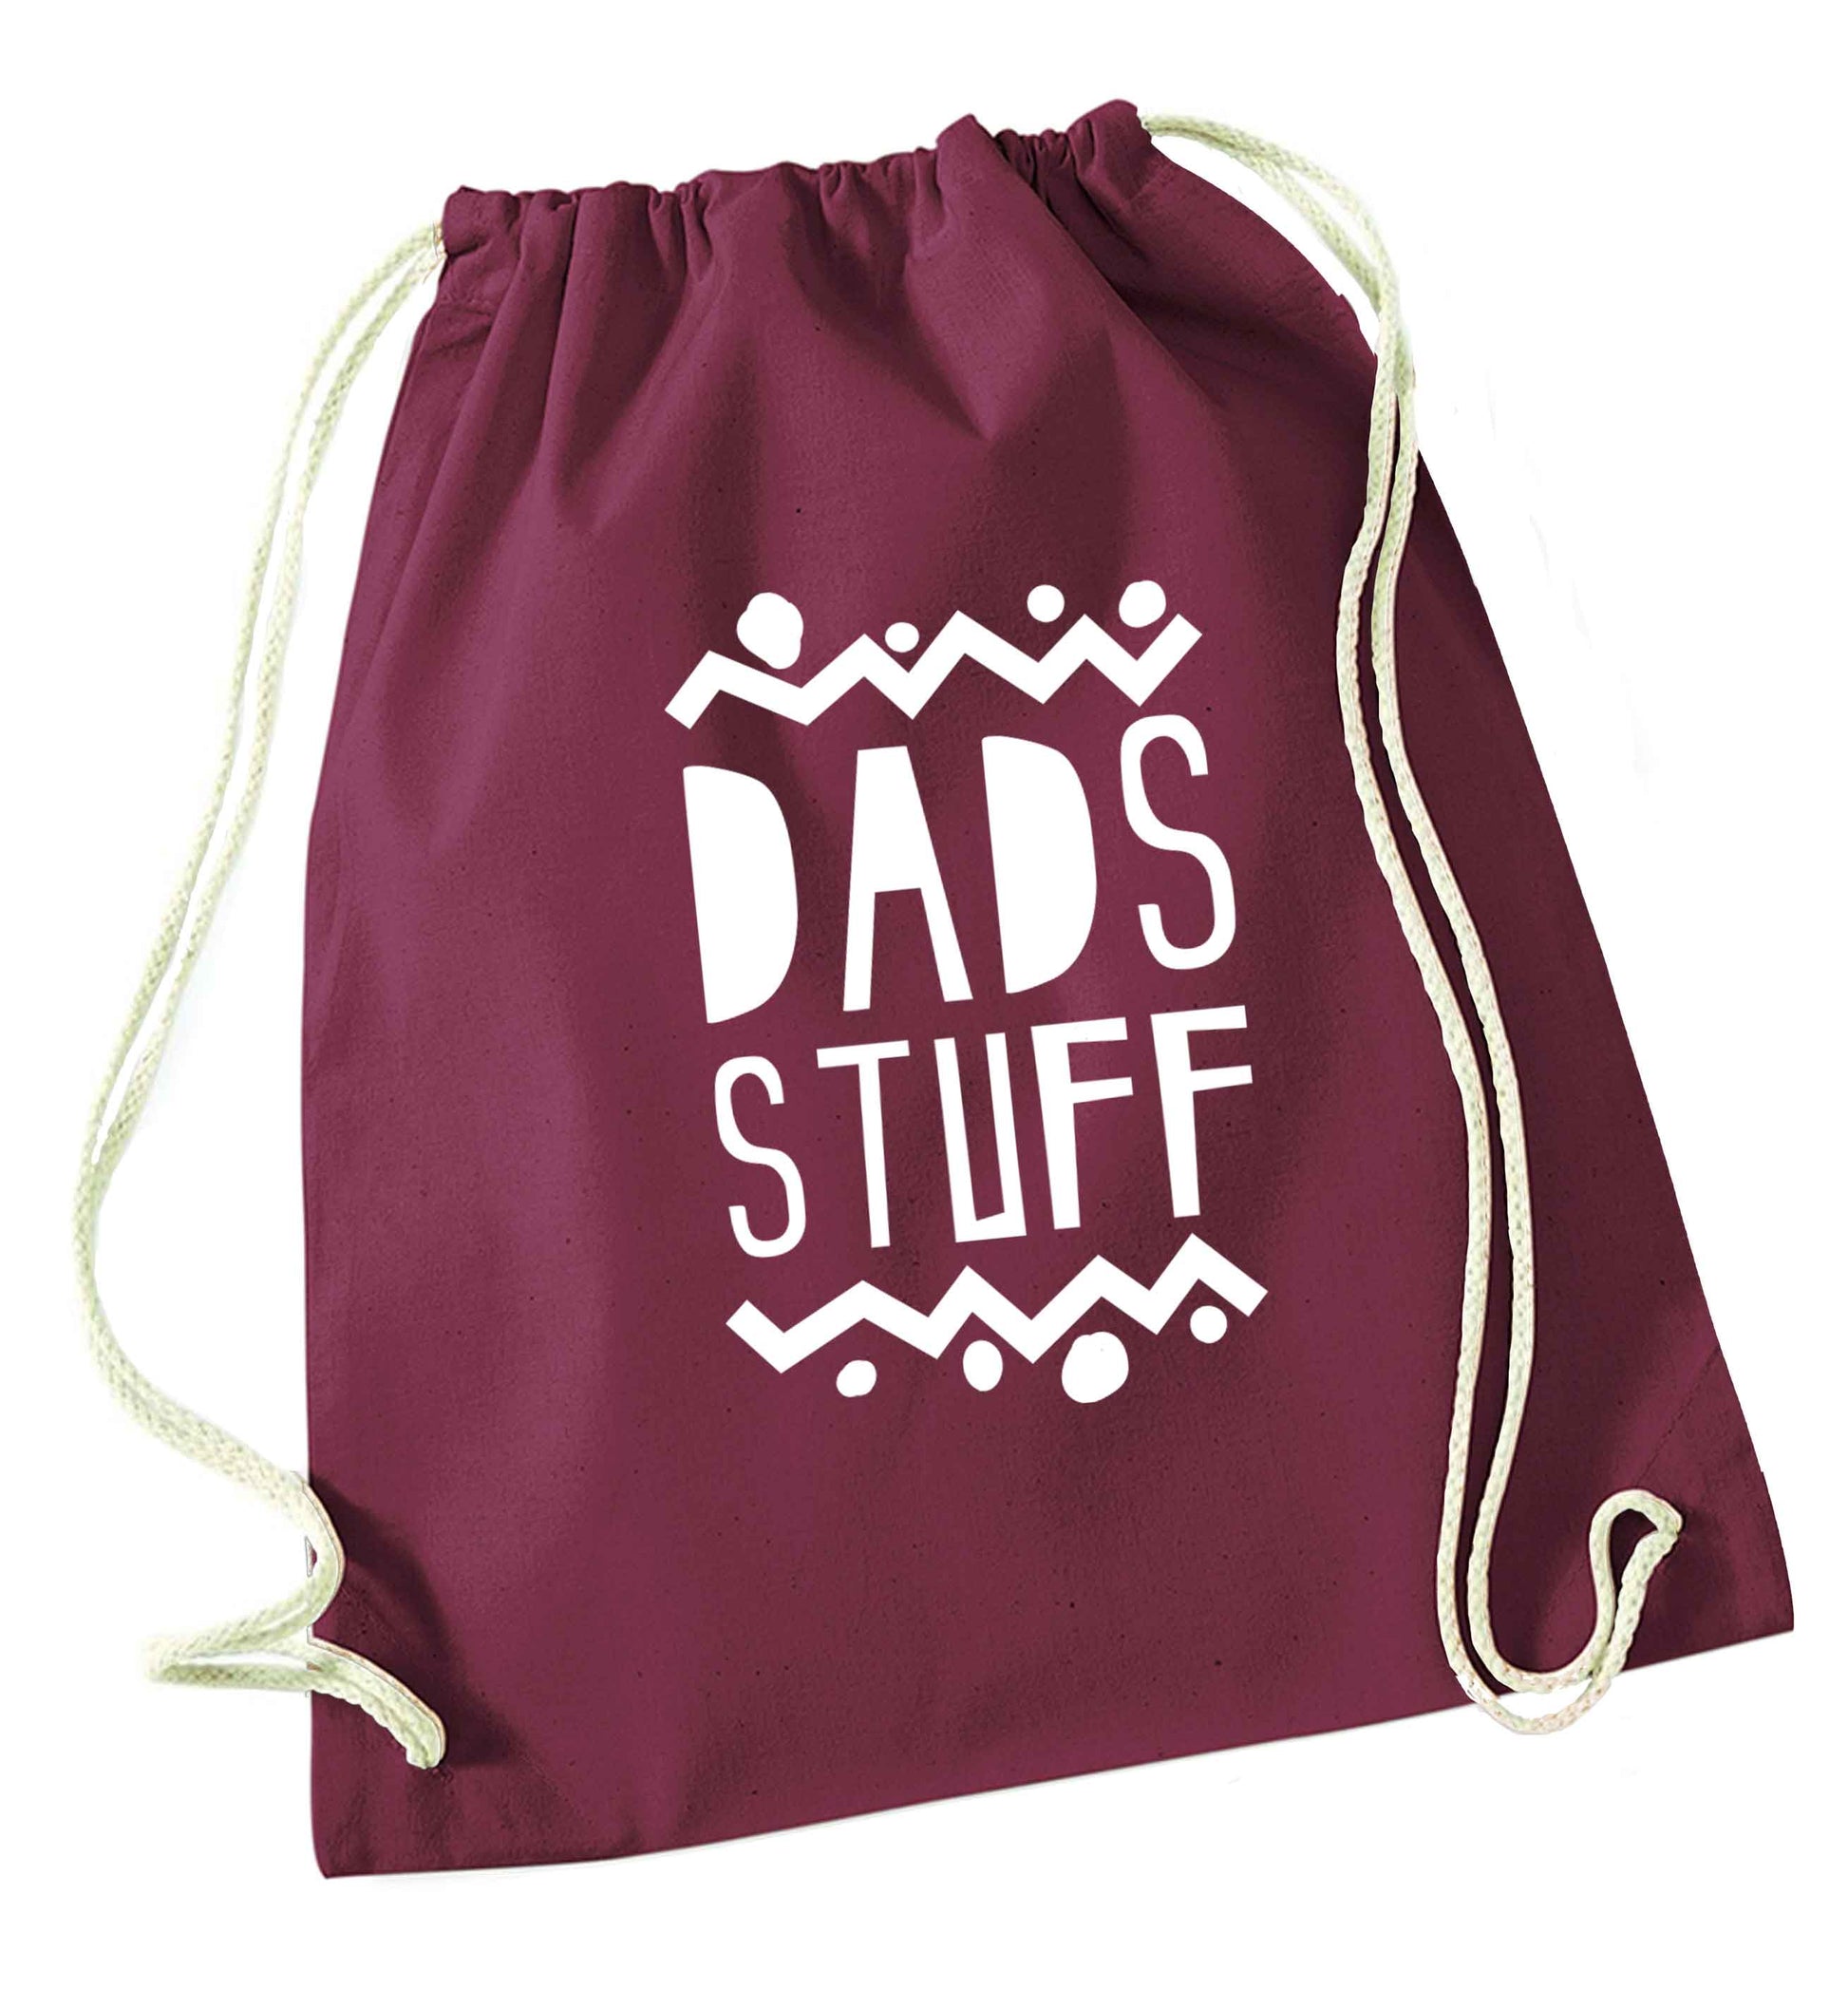 Dads stuff maroon drawstring bag